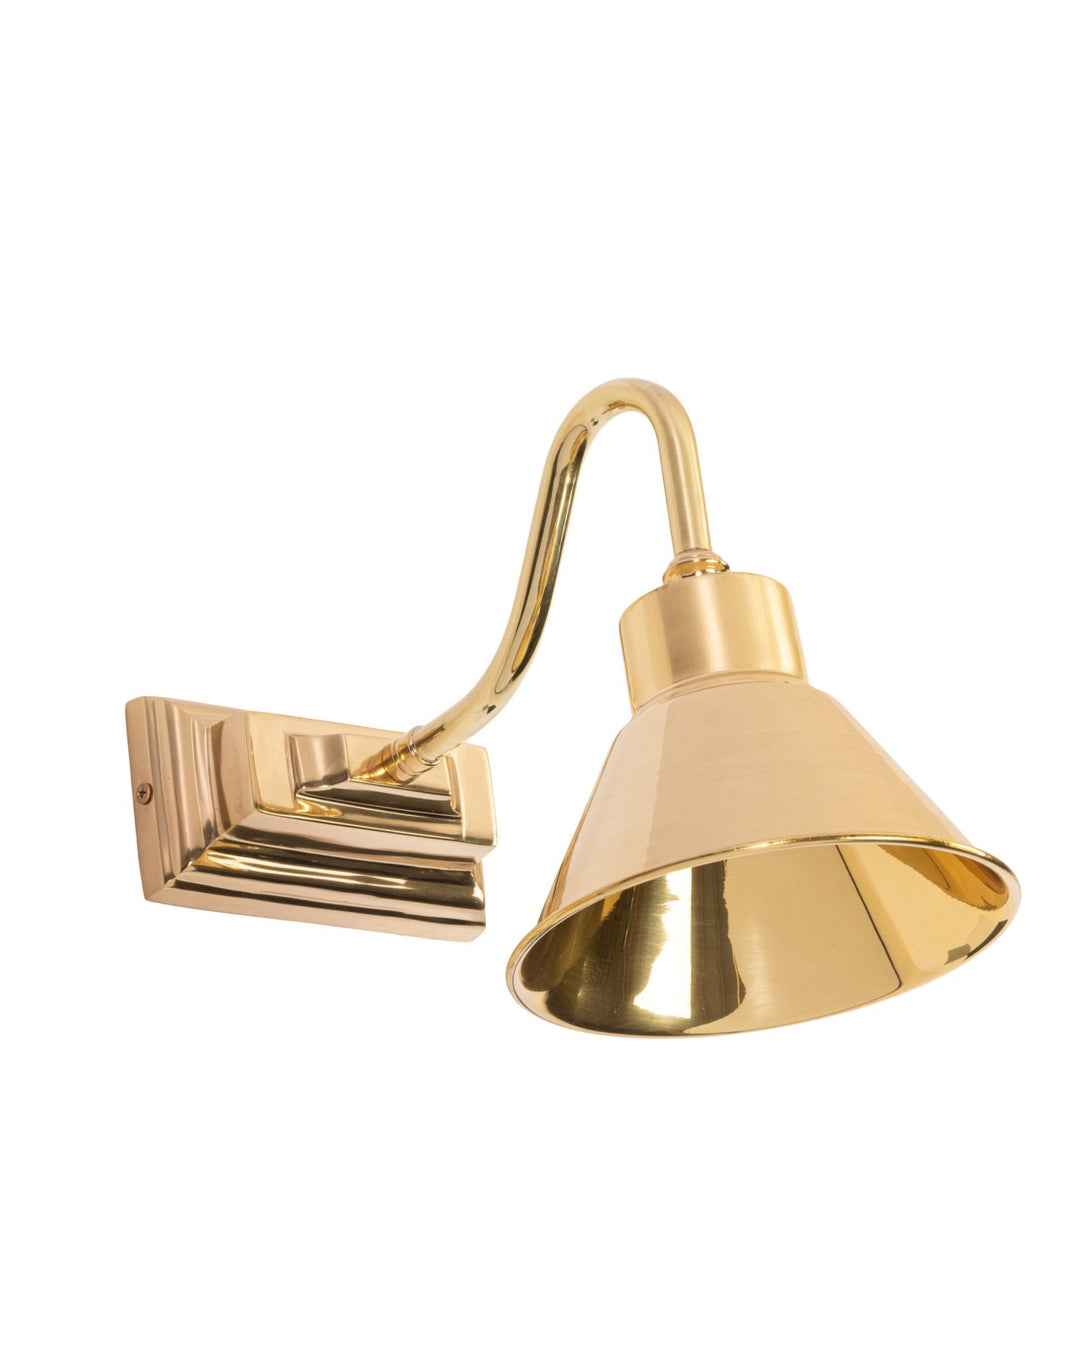 mind-the-gap-Newprt-light-polished-brass-finish-brass-colour-metal-shade-wall-light 